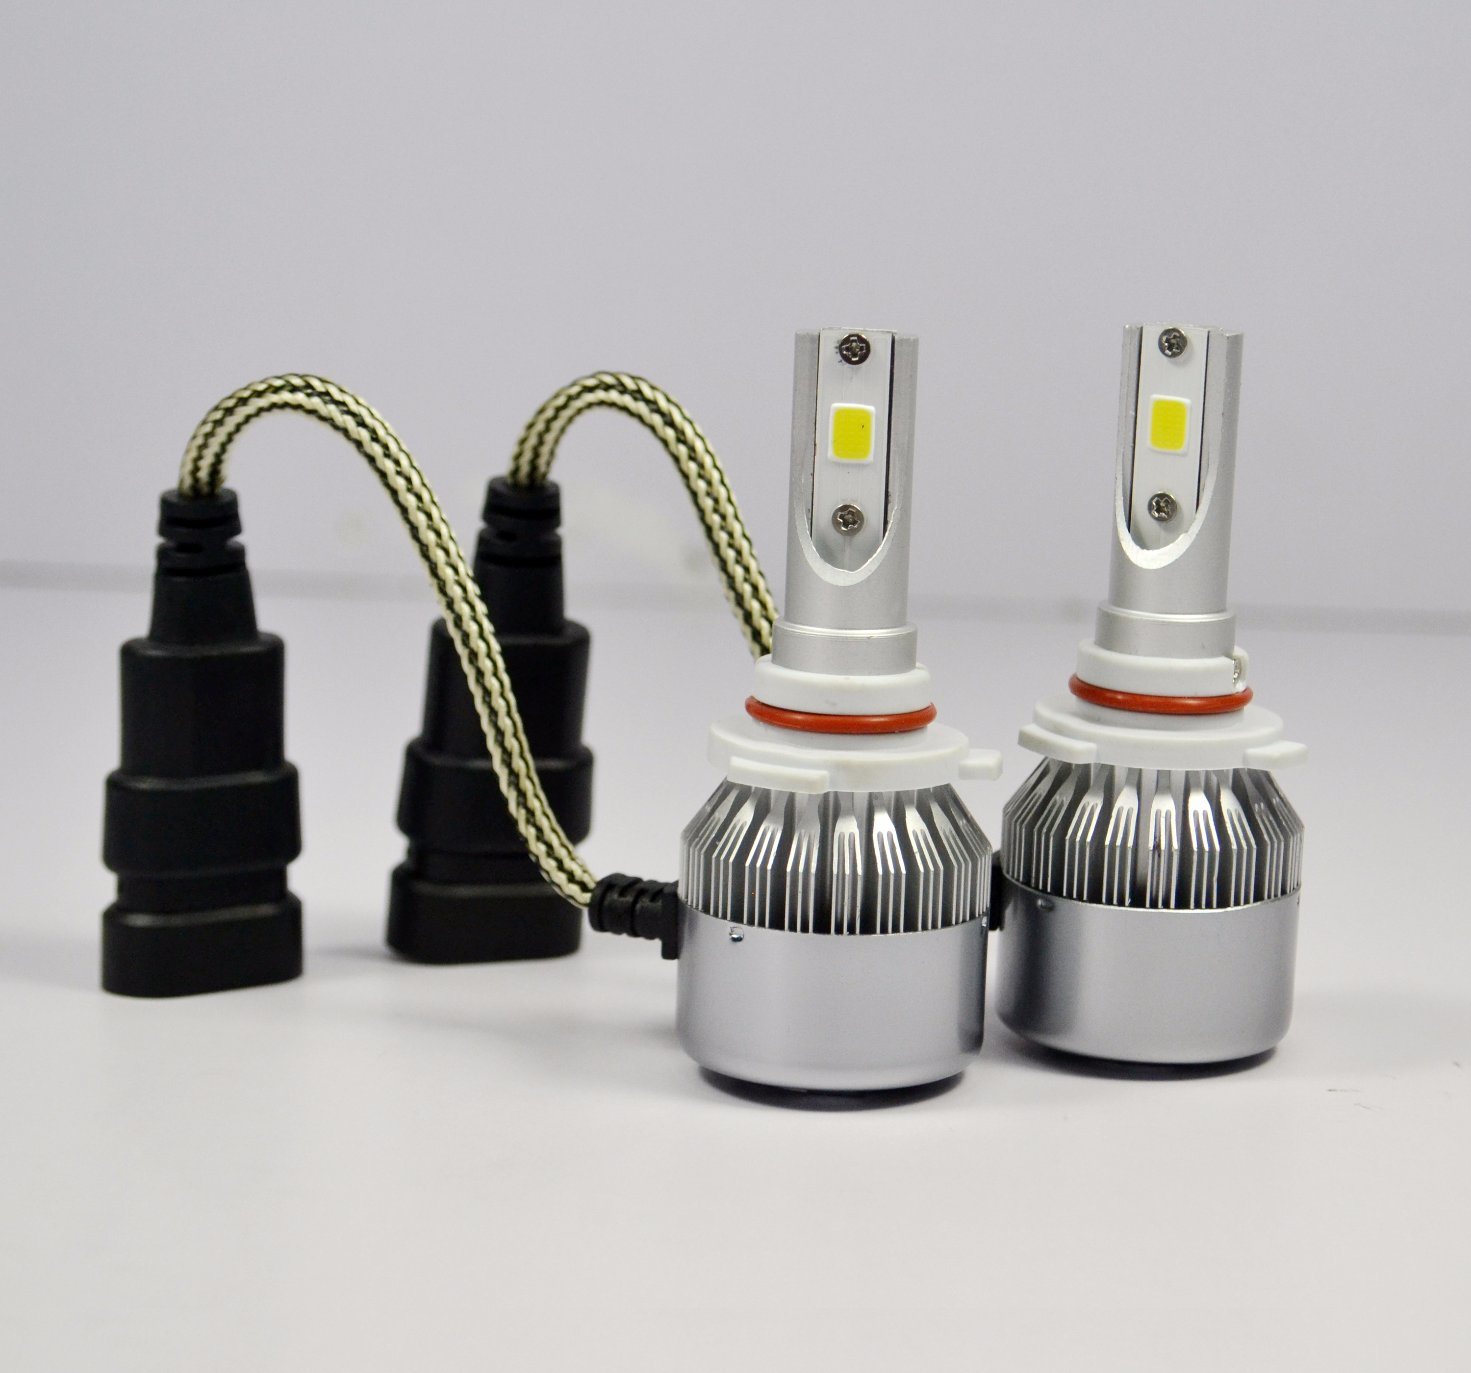 LED Headlight Bulbs, 9006 LED Headlamp Motorcycle Conversion Kits for Cars Automotive, 26W 4300K/6000K Cool White